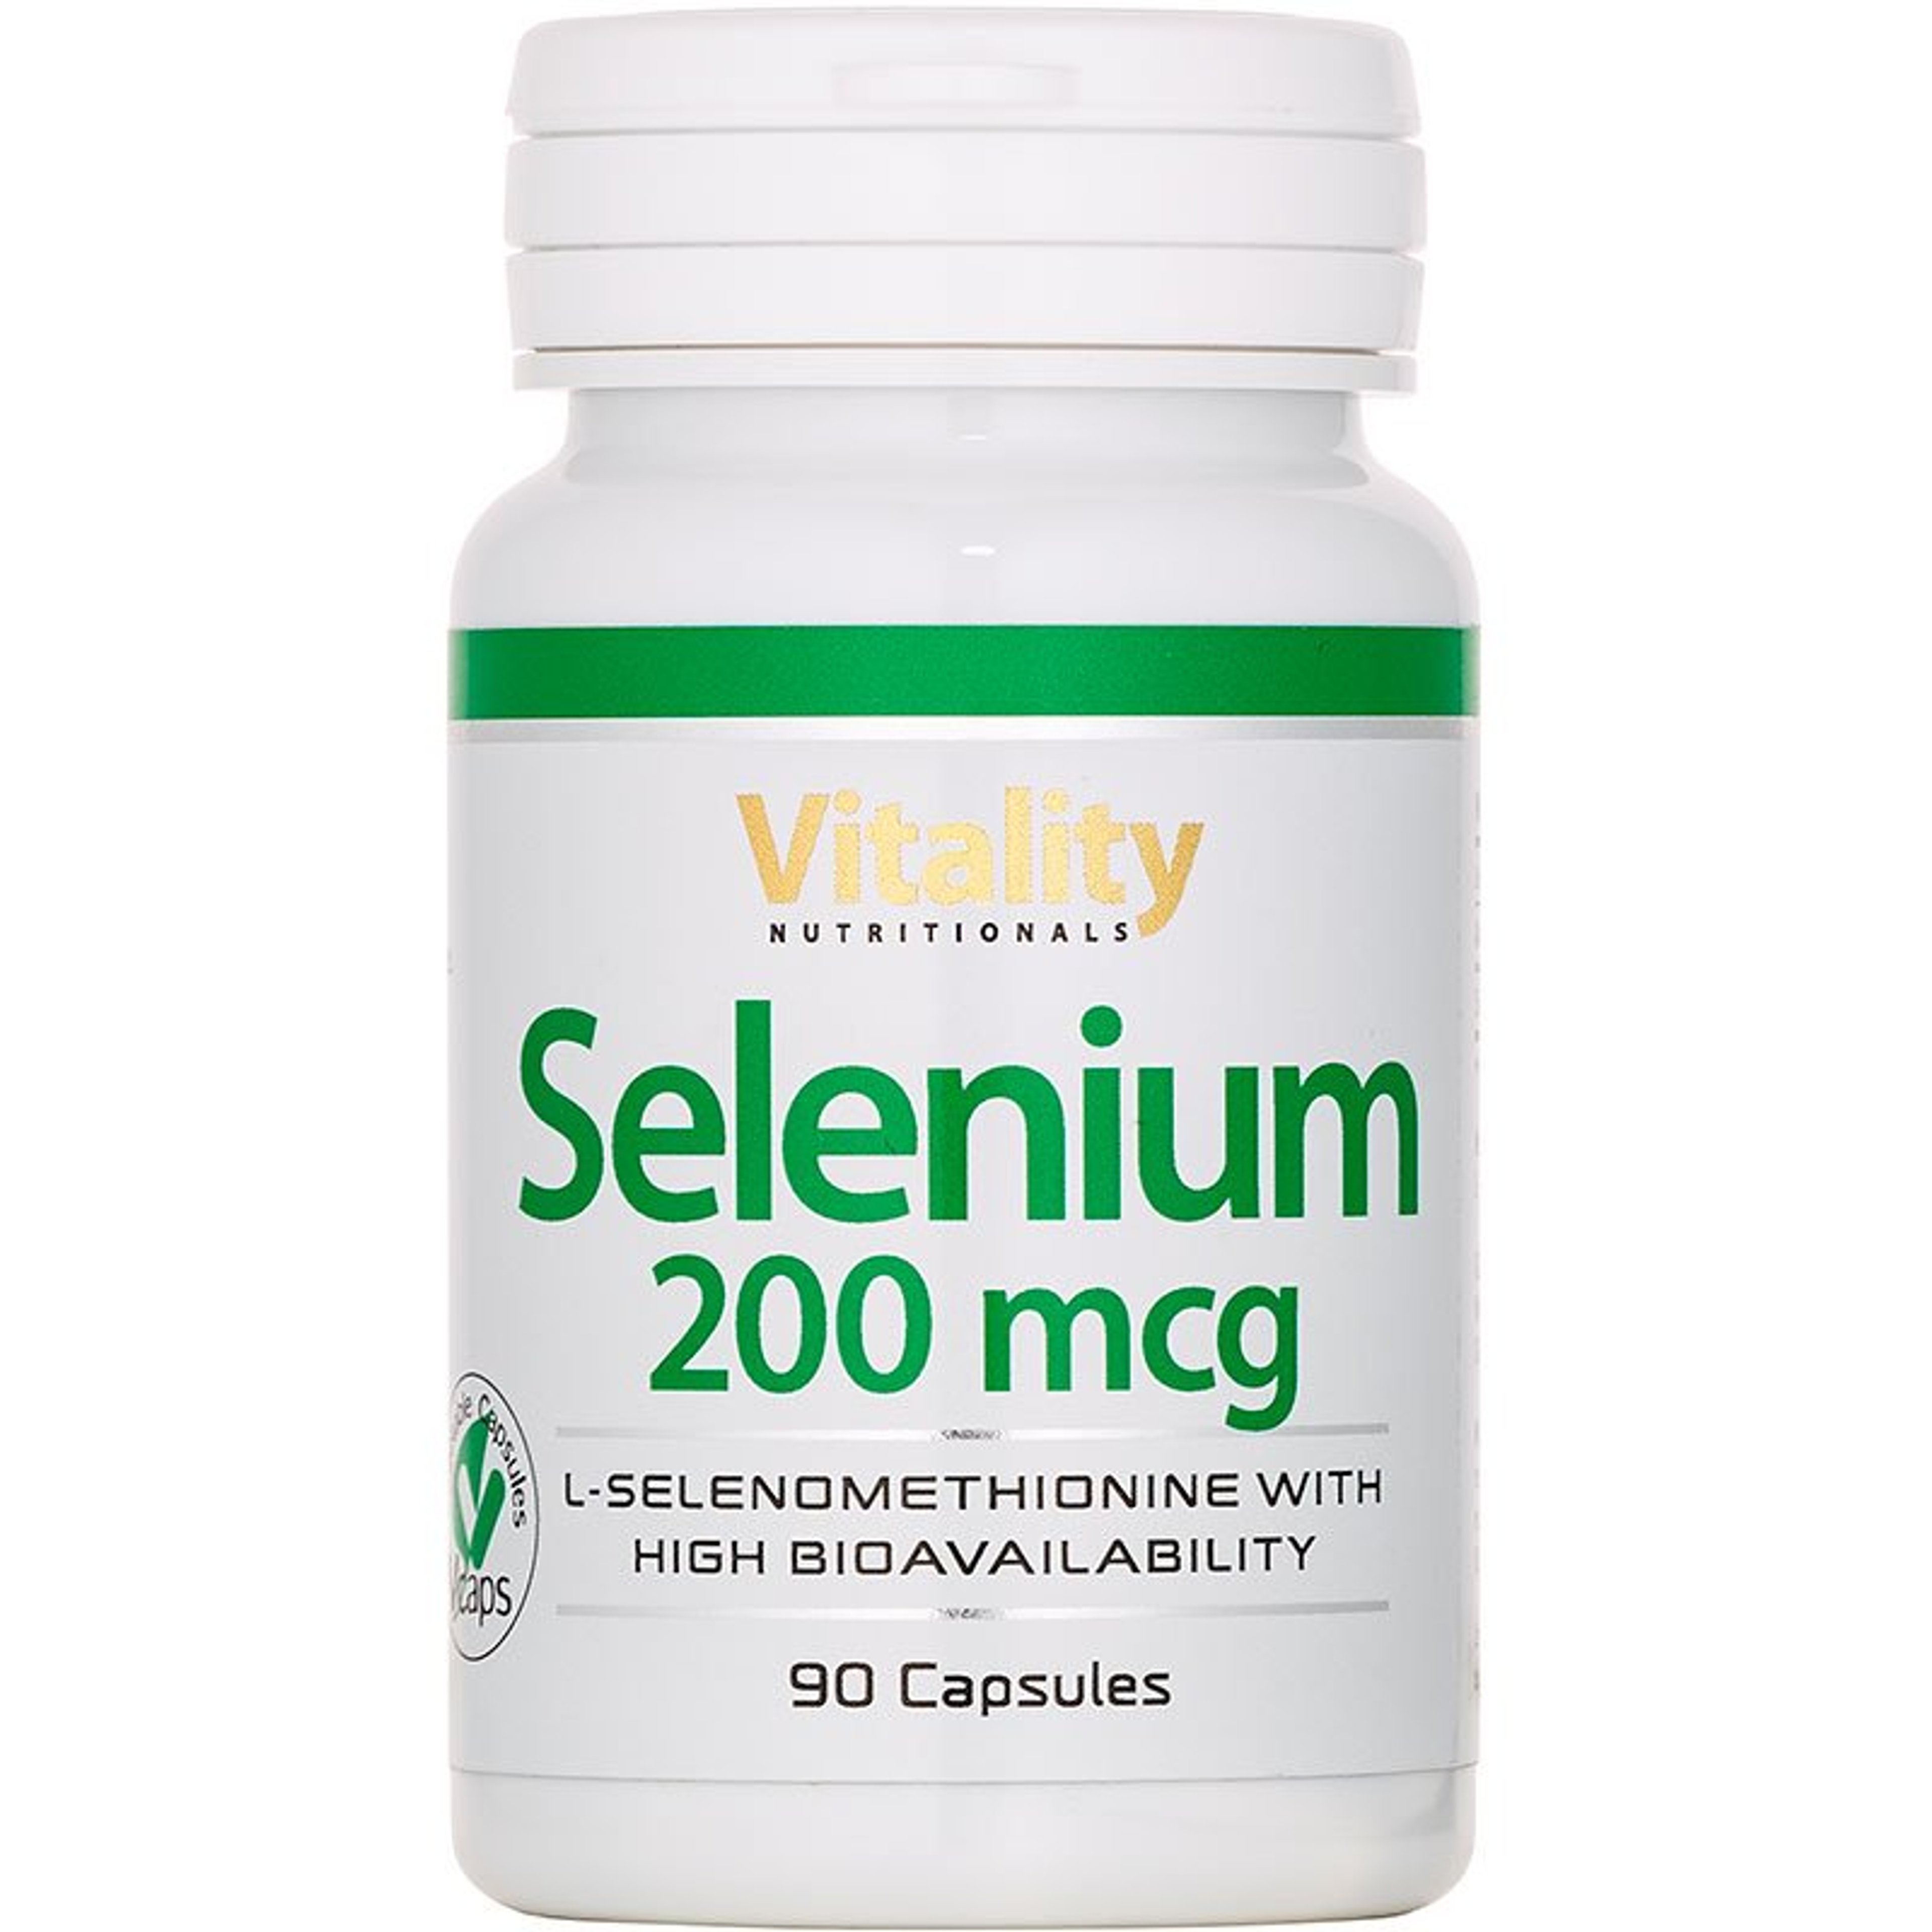 vitality-nutritionals-selenium-200mcg.jpg